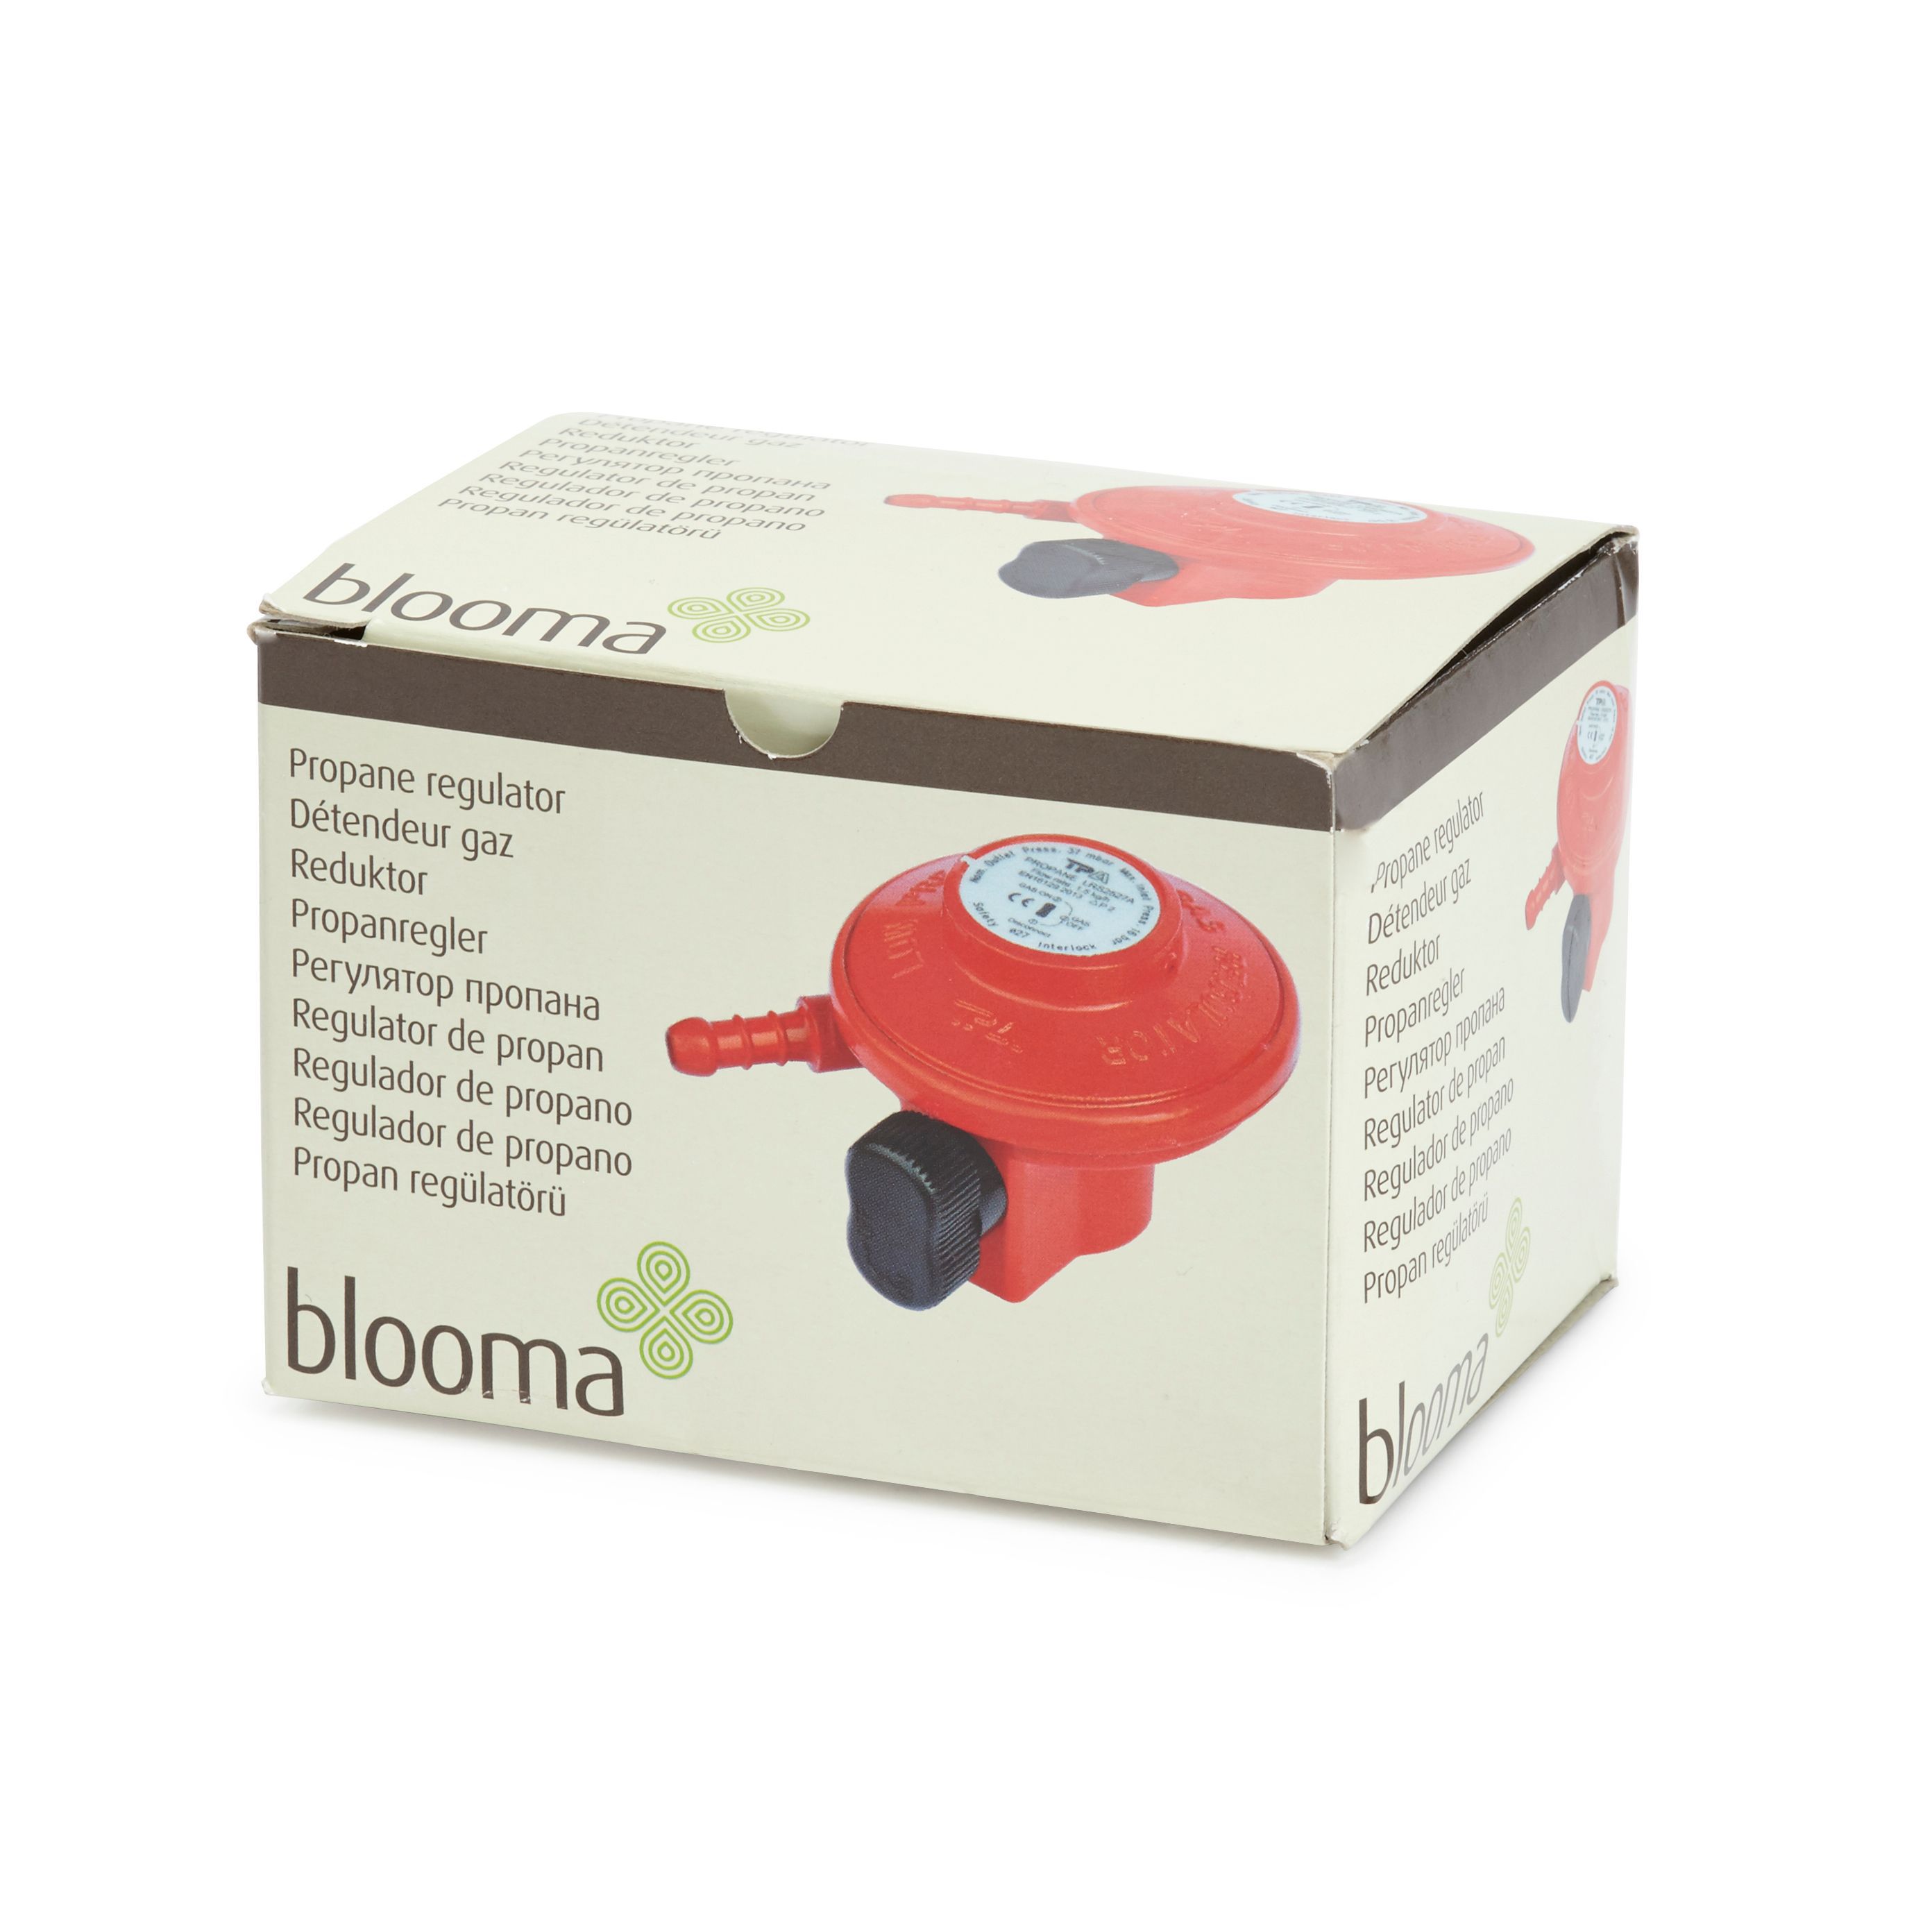 Blooma Propane Gas regulator